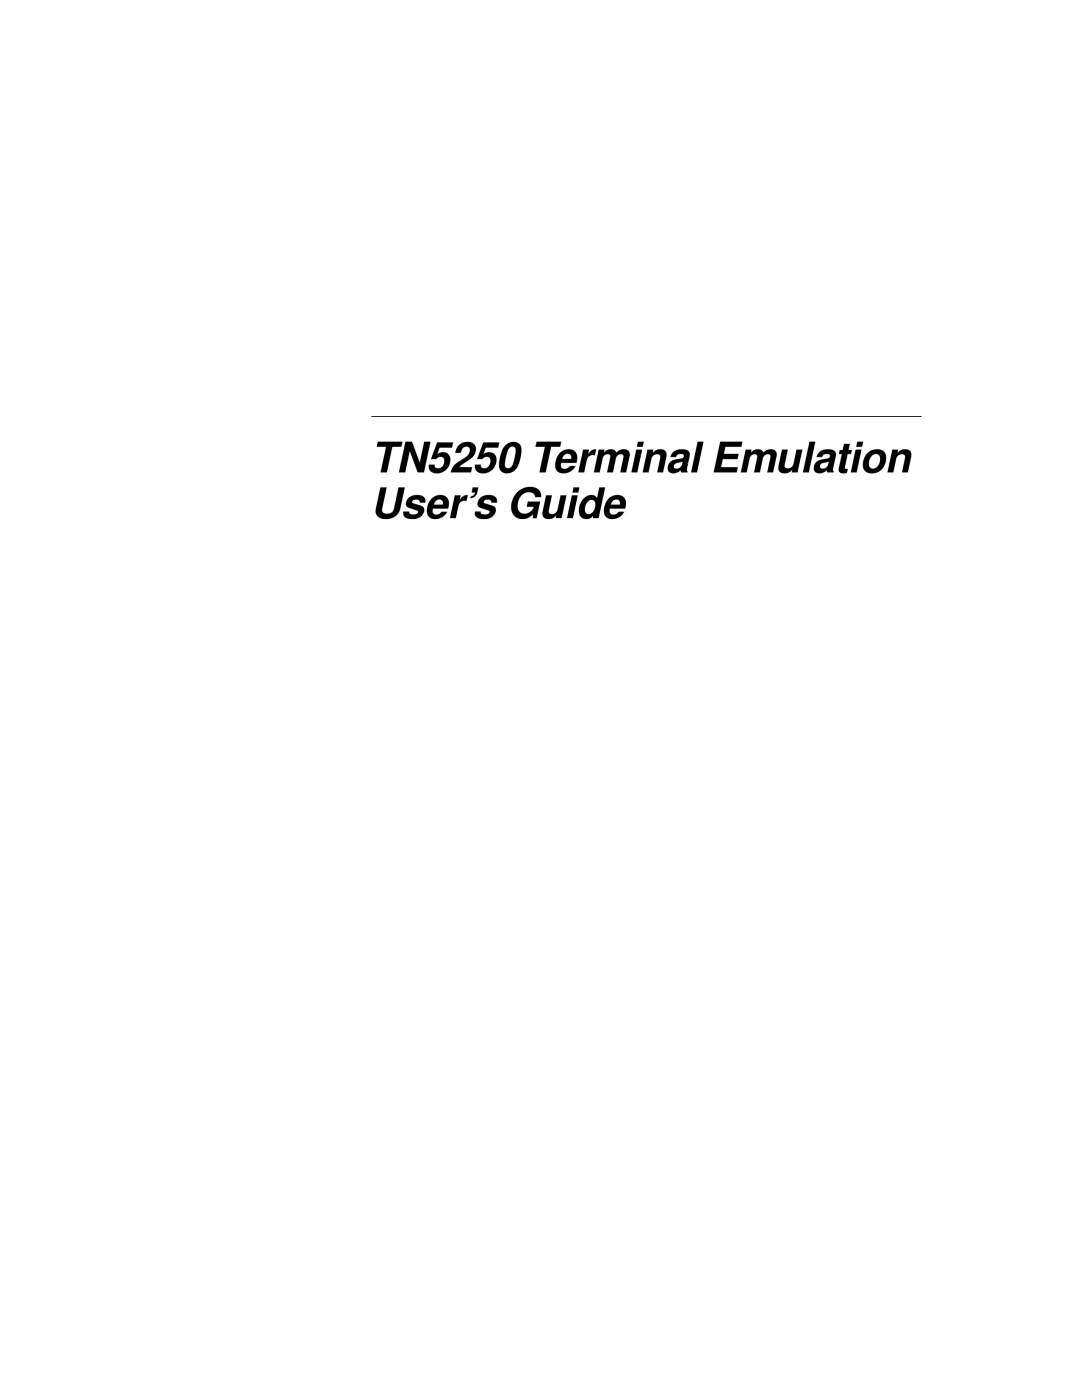 IBM manual TN5250 Terminal Emulation User’s Guide 